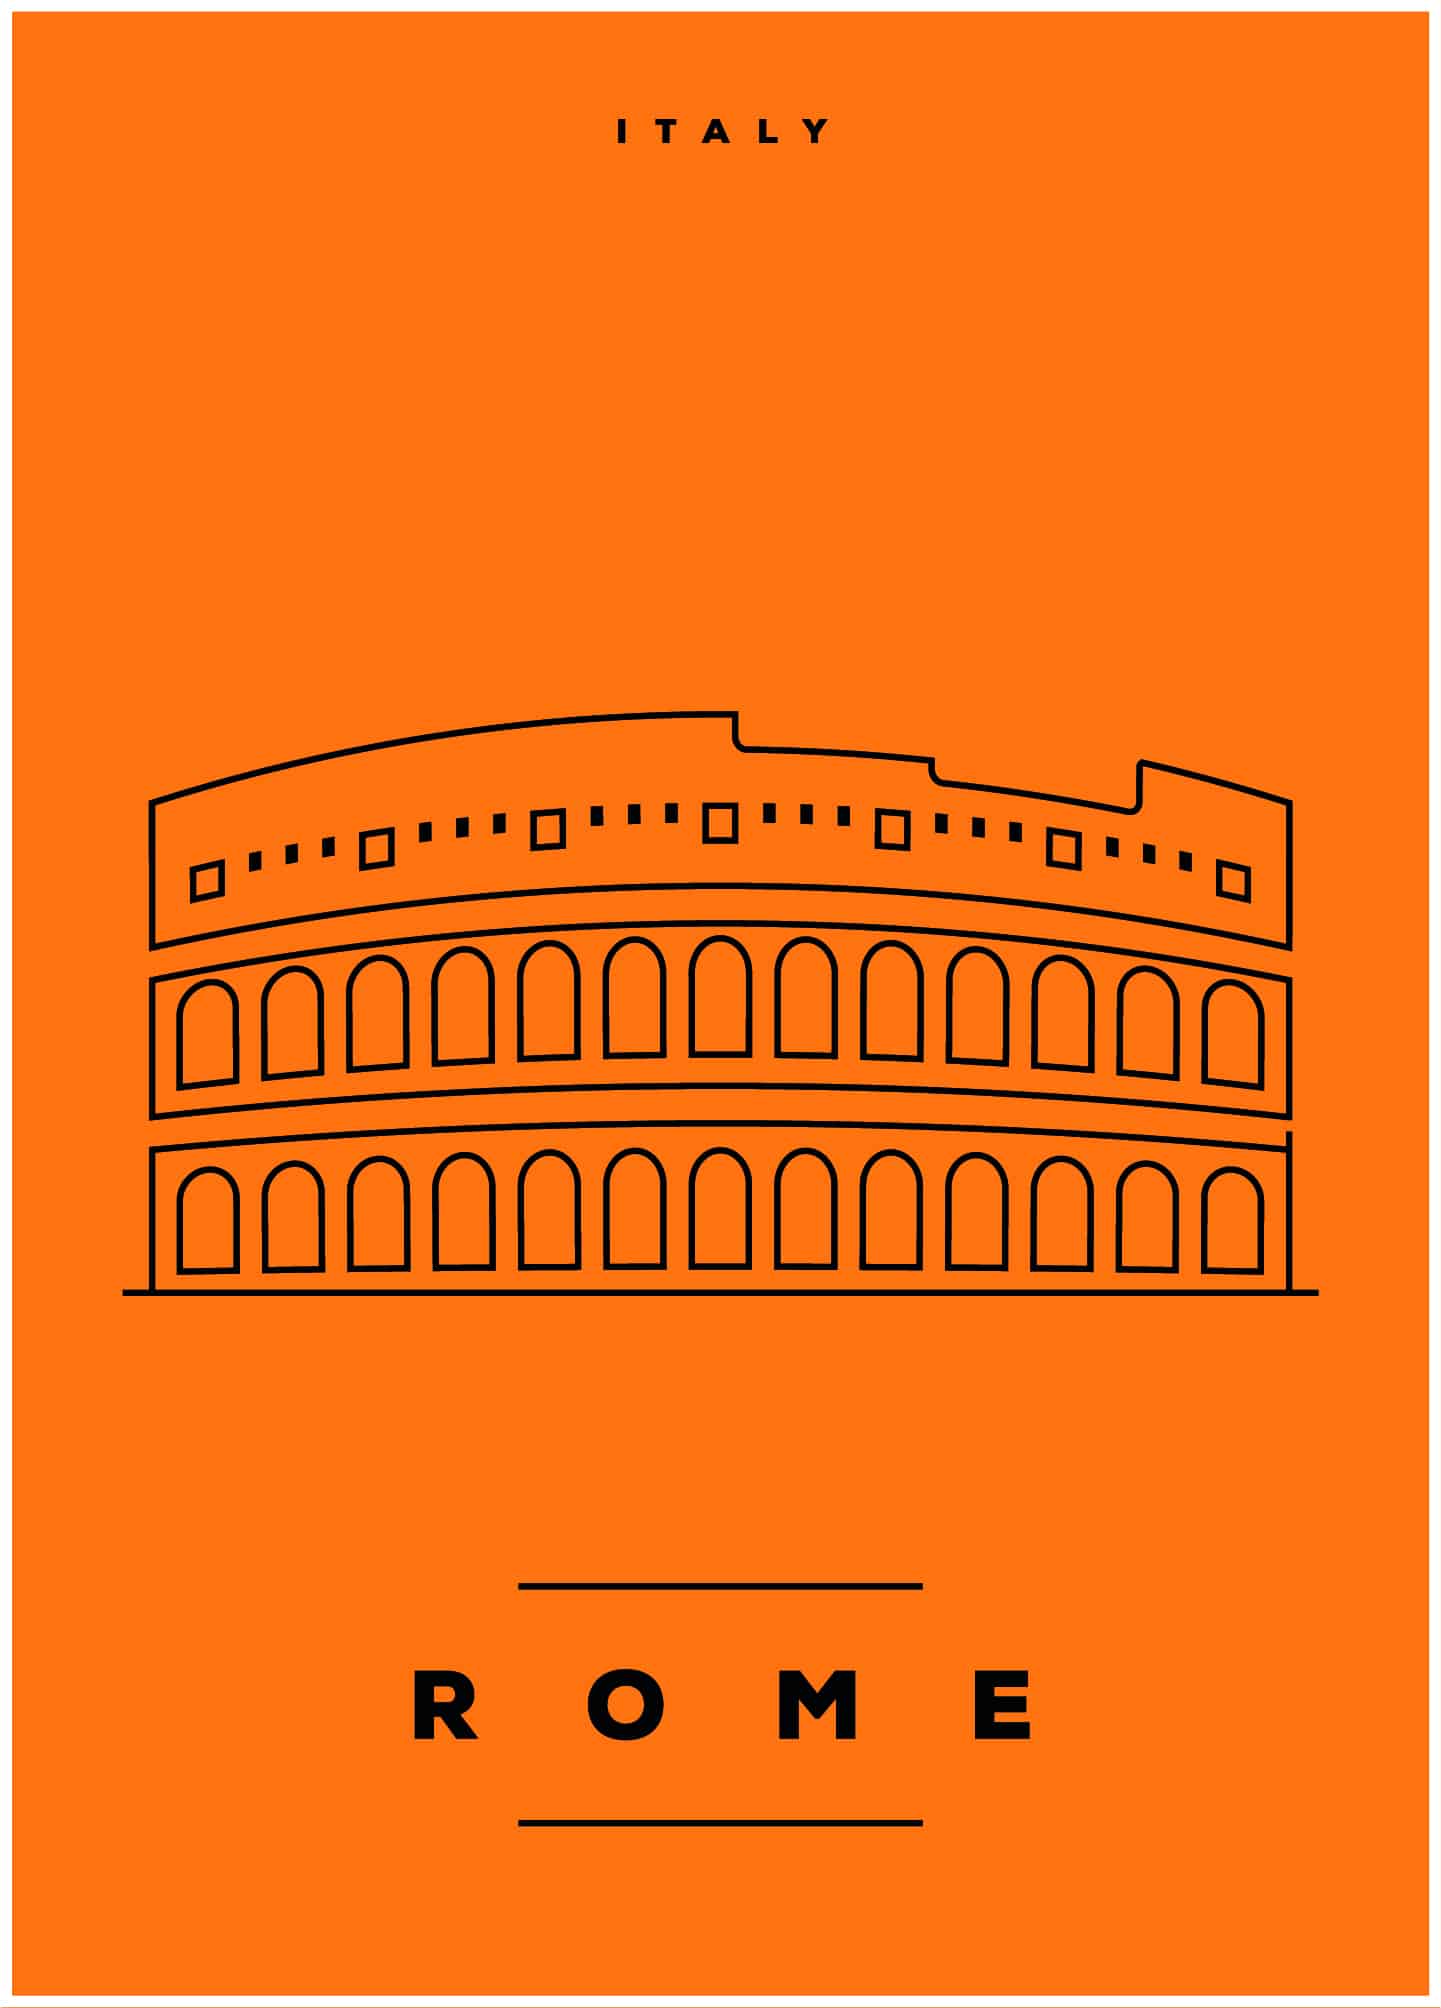 Rome Illustration On Orange Background Poster